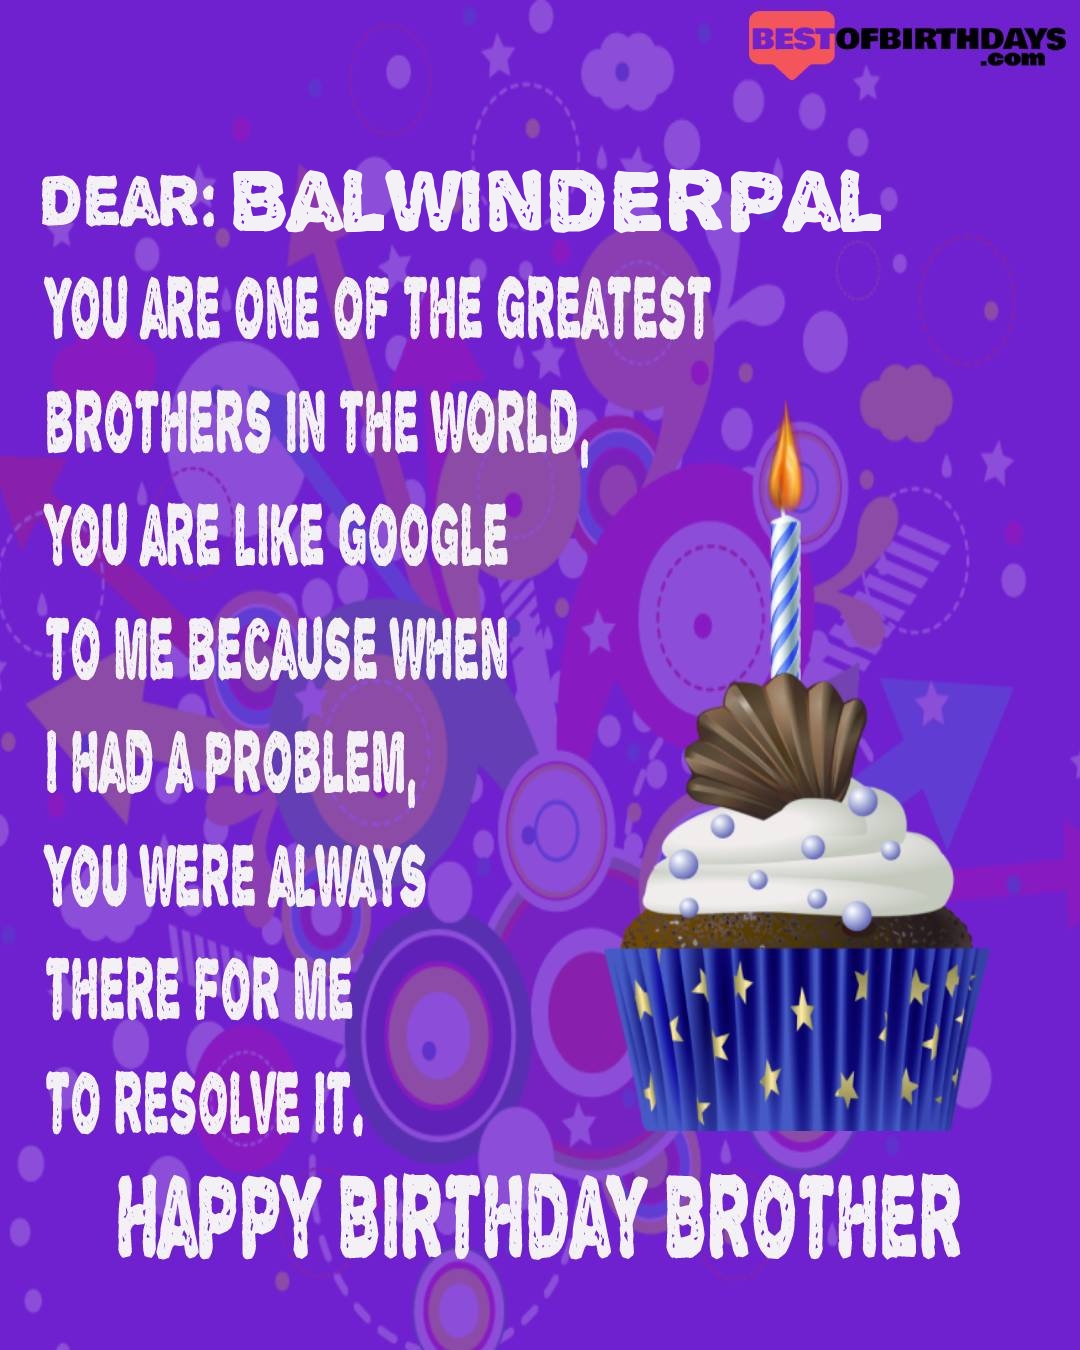 Happy birthday balwinderpal bhai brother bro